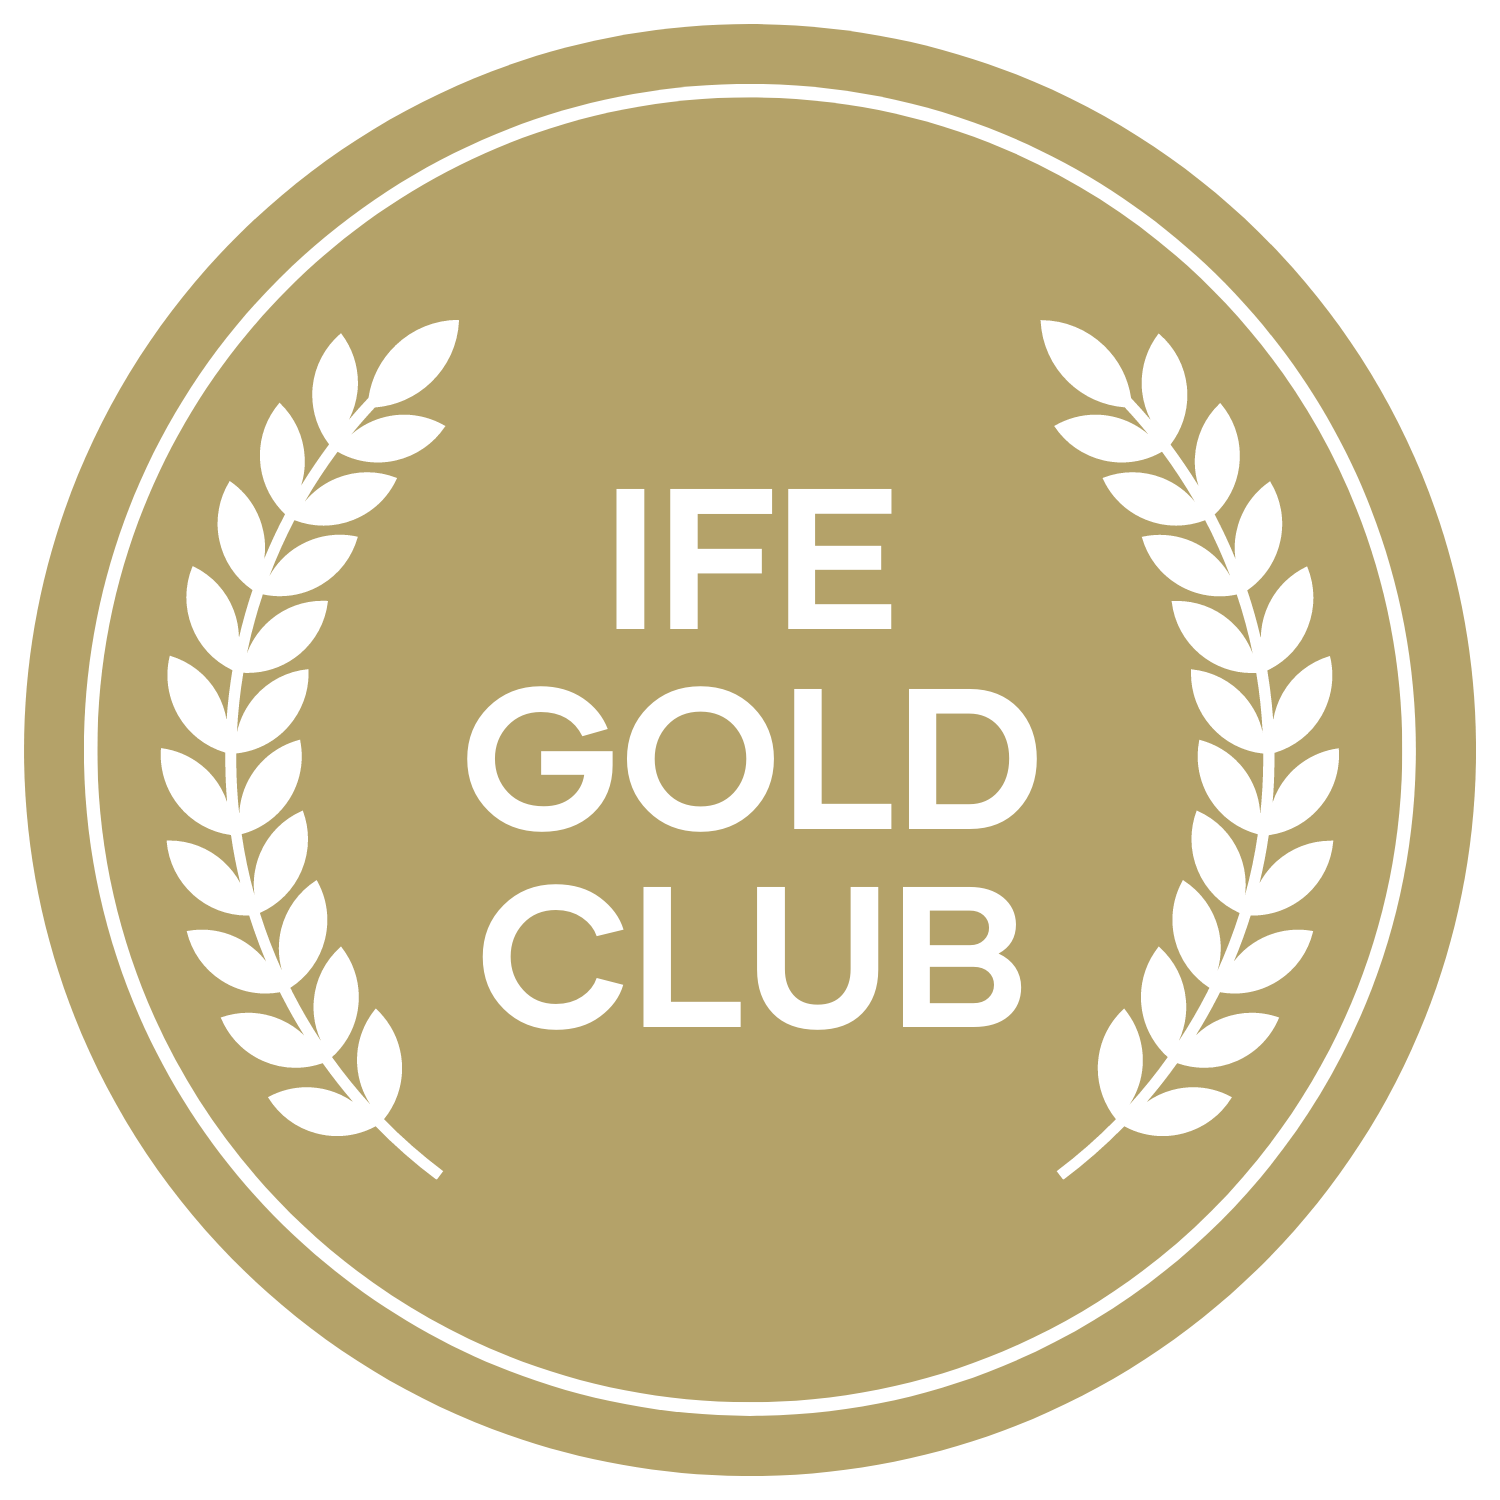 IFE Gold Club Roundel